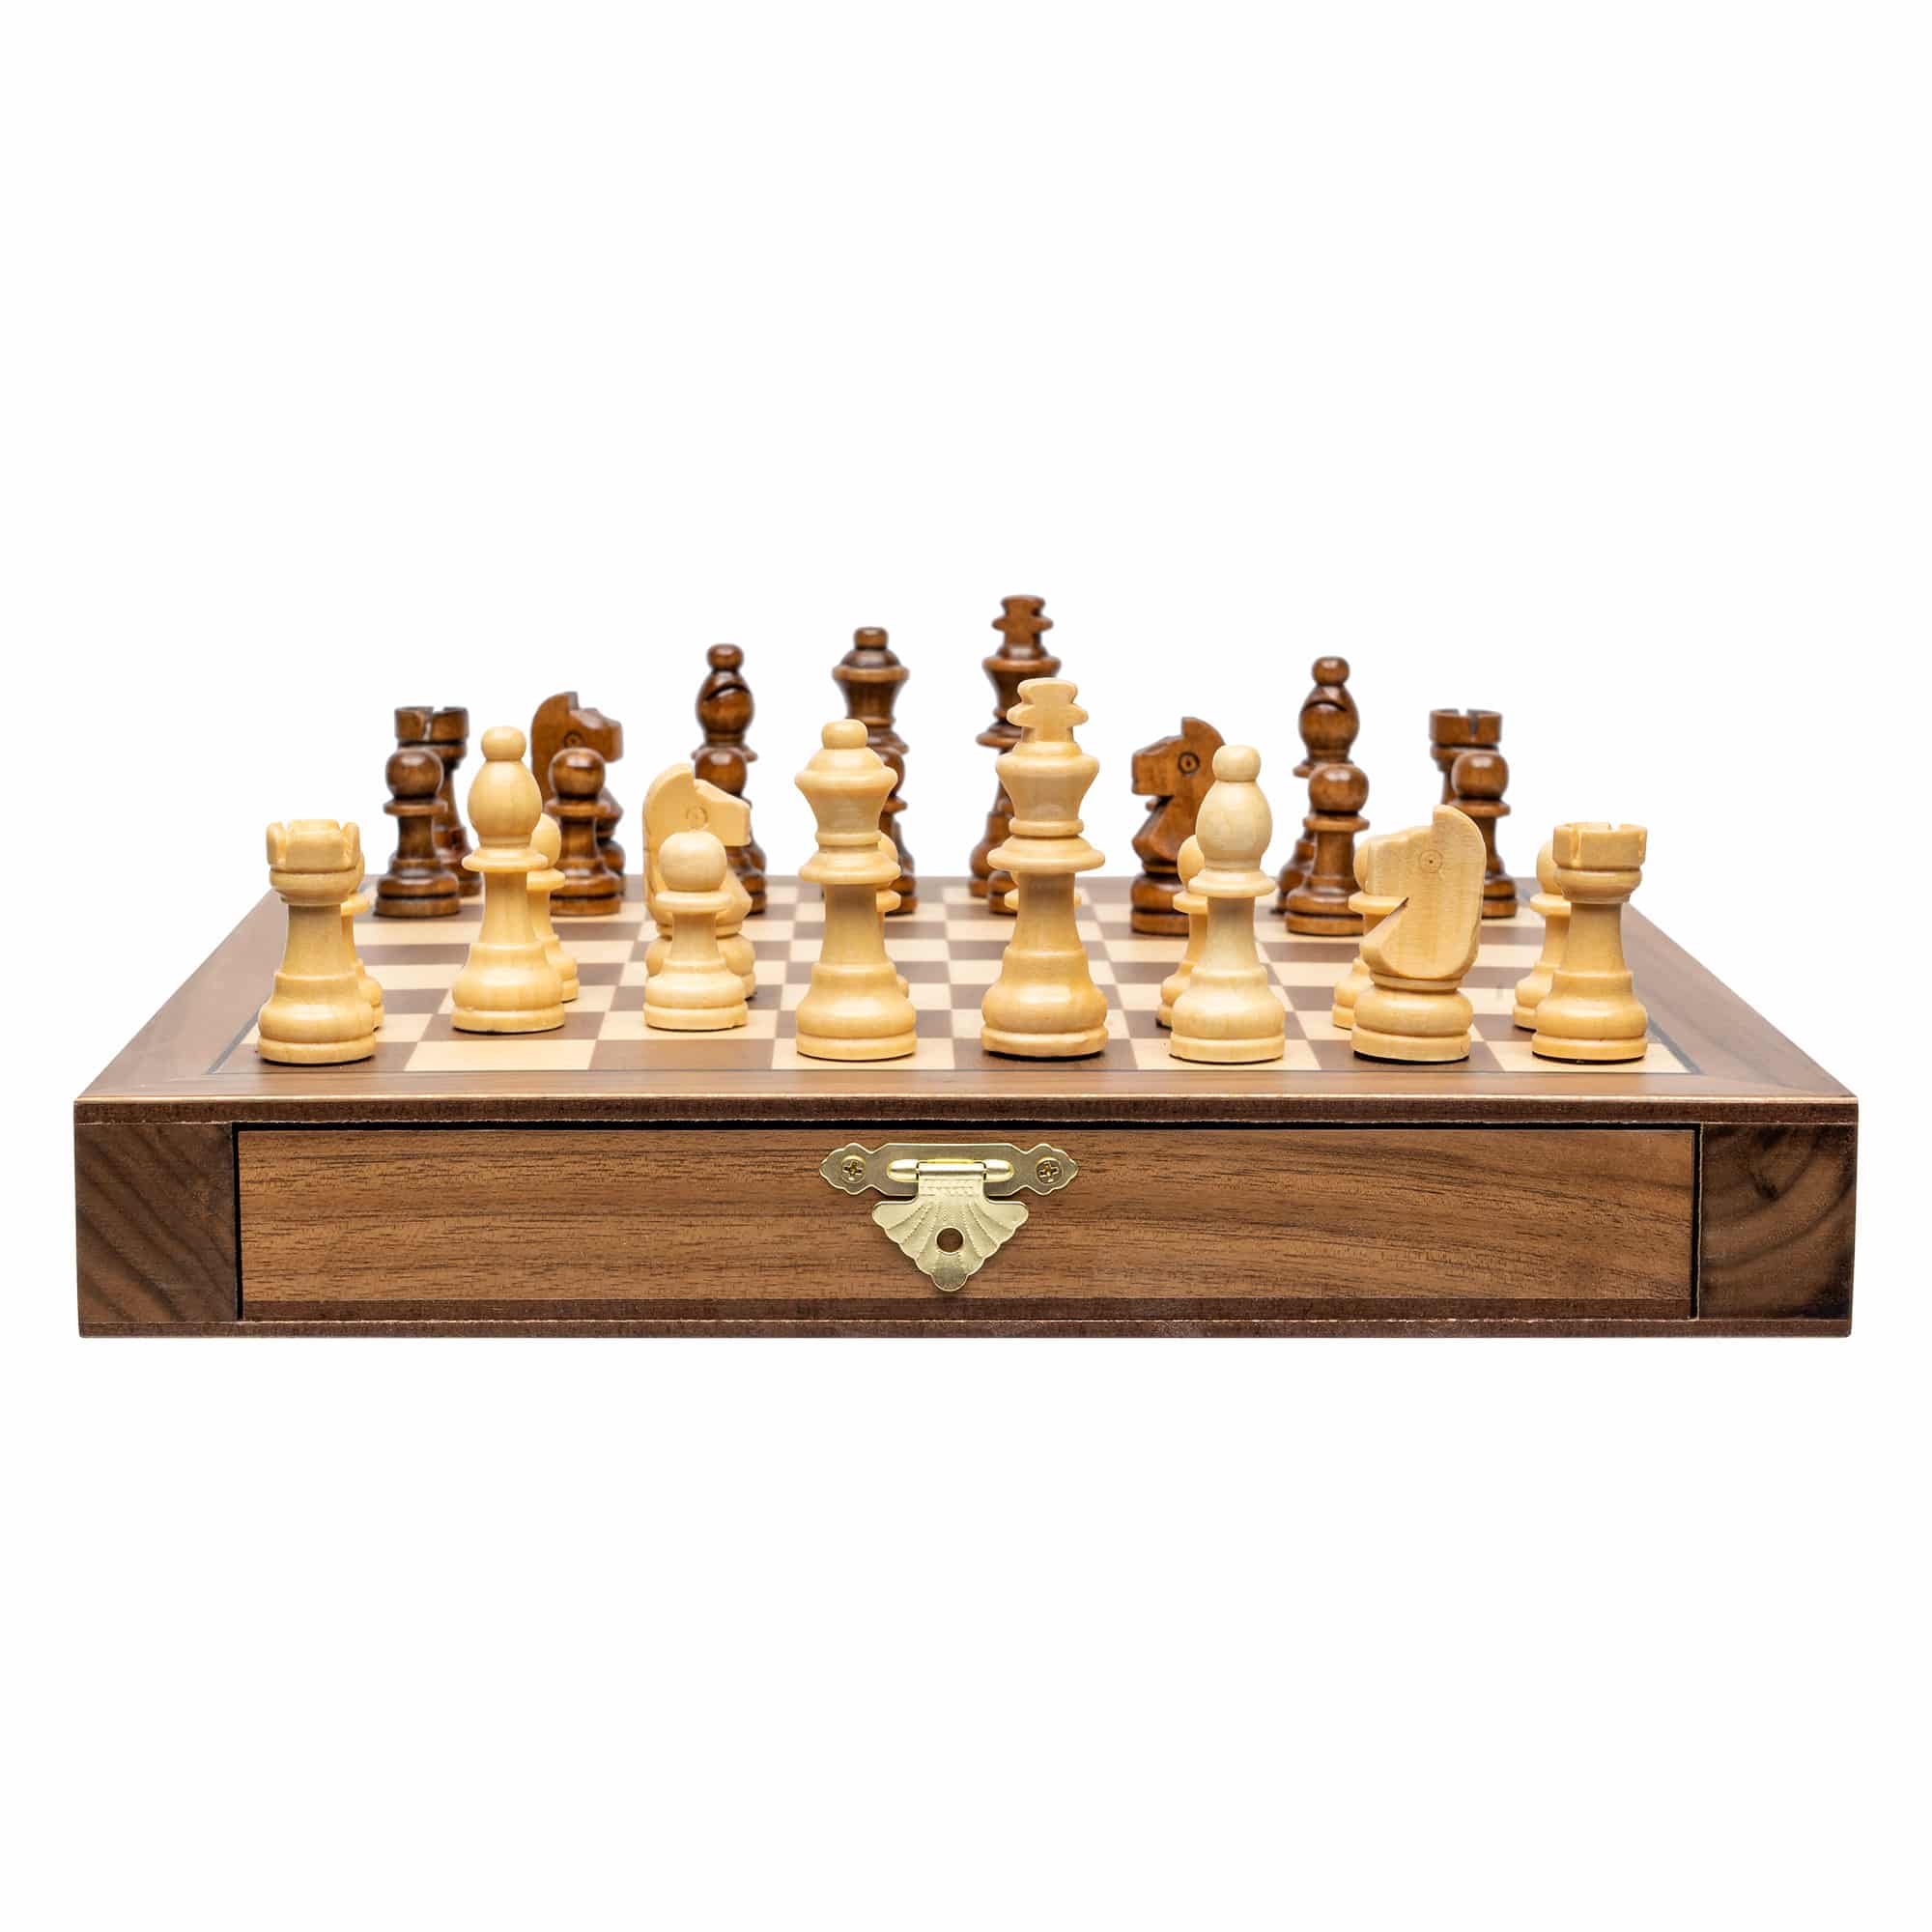 Walnut Magnetic Chess Set - 25cm